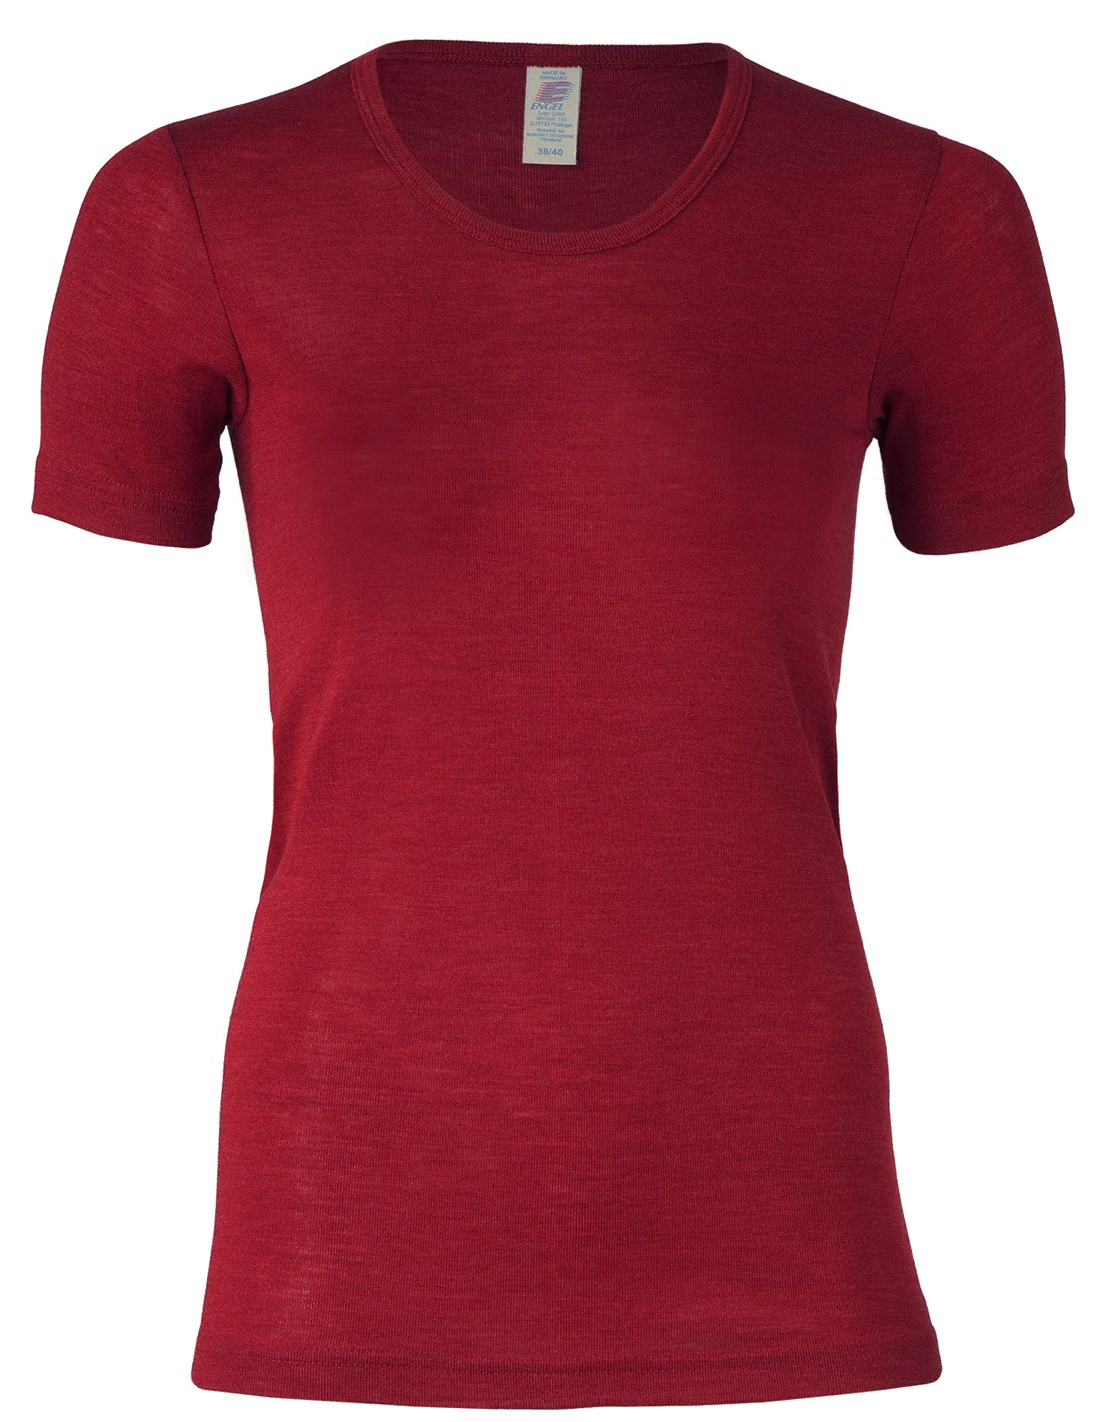 Image of Dames T-Shirt Zijde Wol Engel Natur, Kleur Bordeauxrood, Maat 34/36 - Small